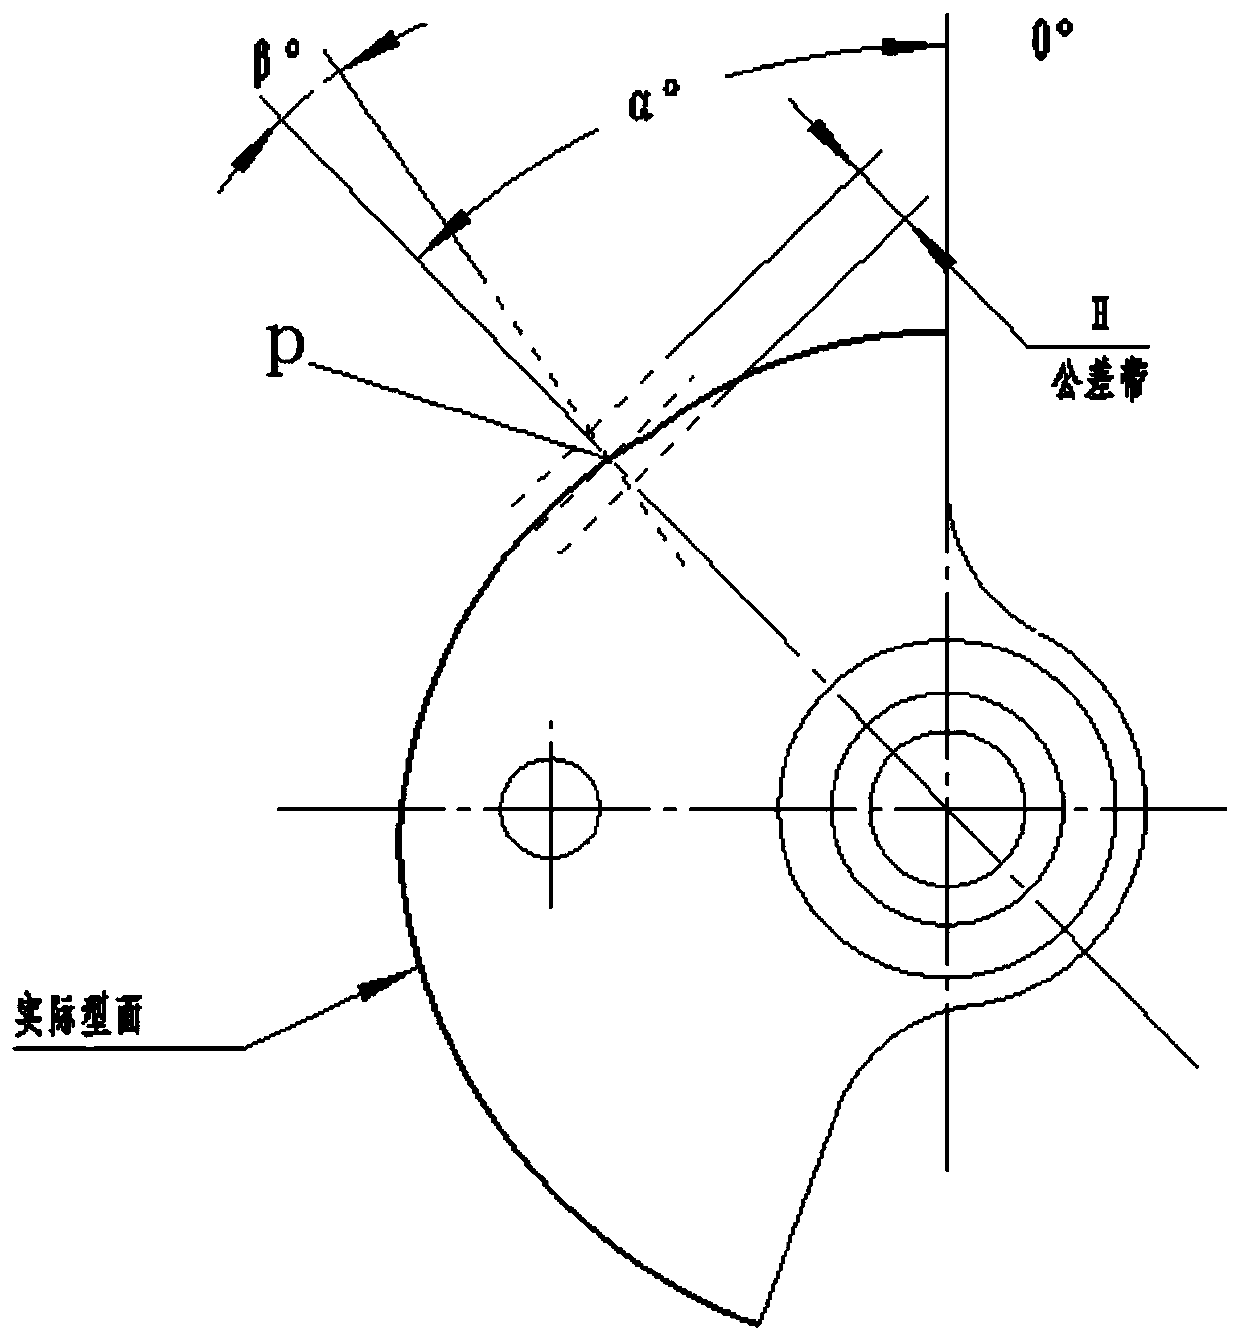 Two-dimensional cam part shape digital measurement method based on profile